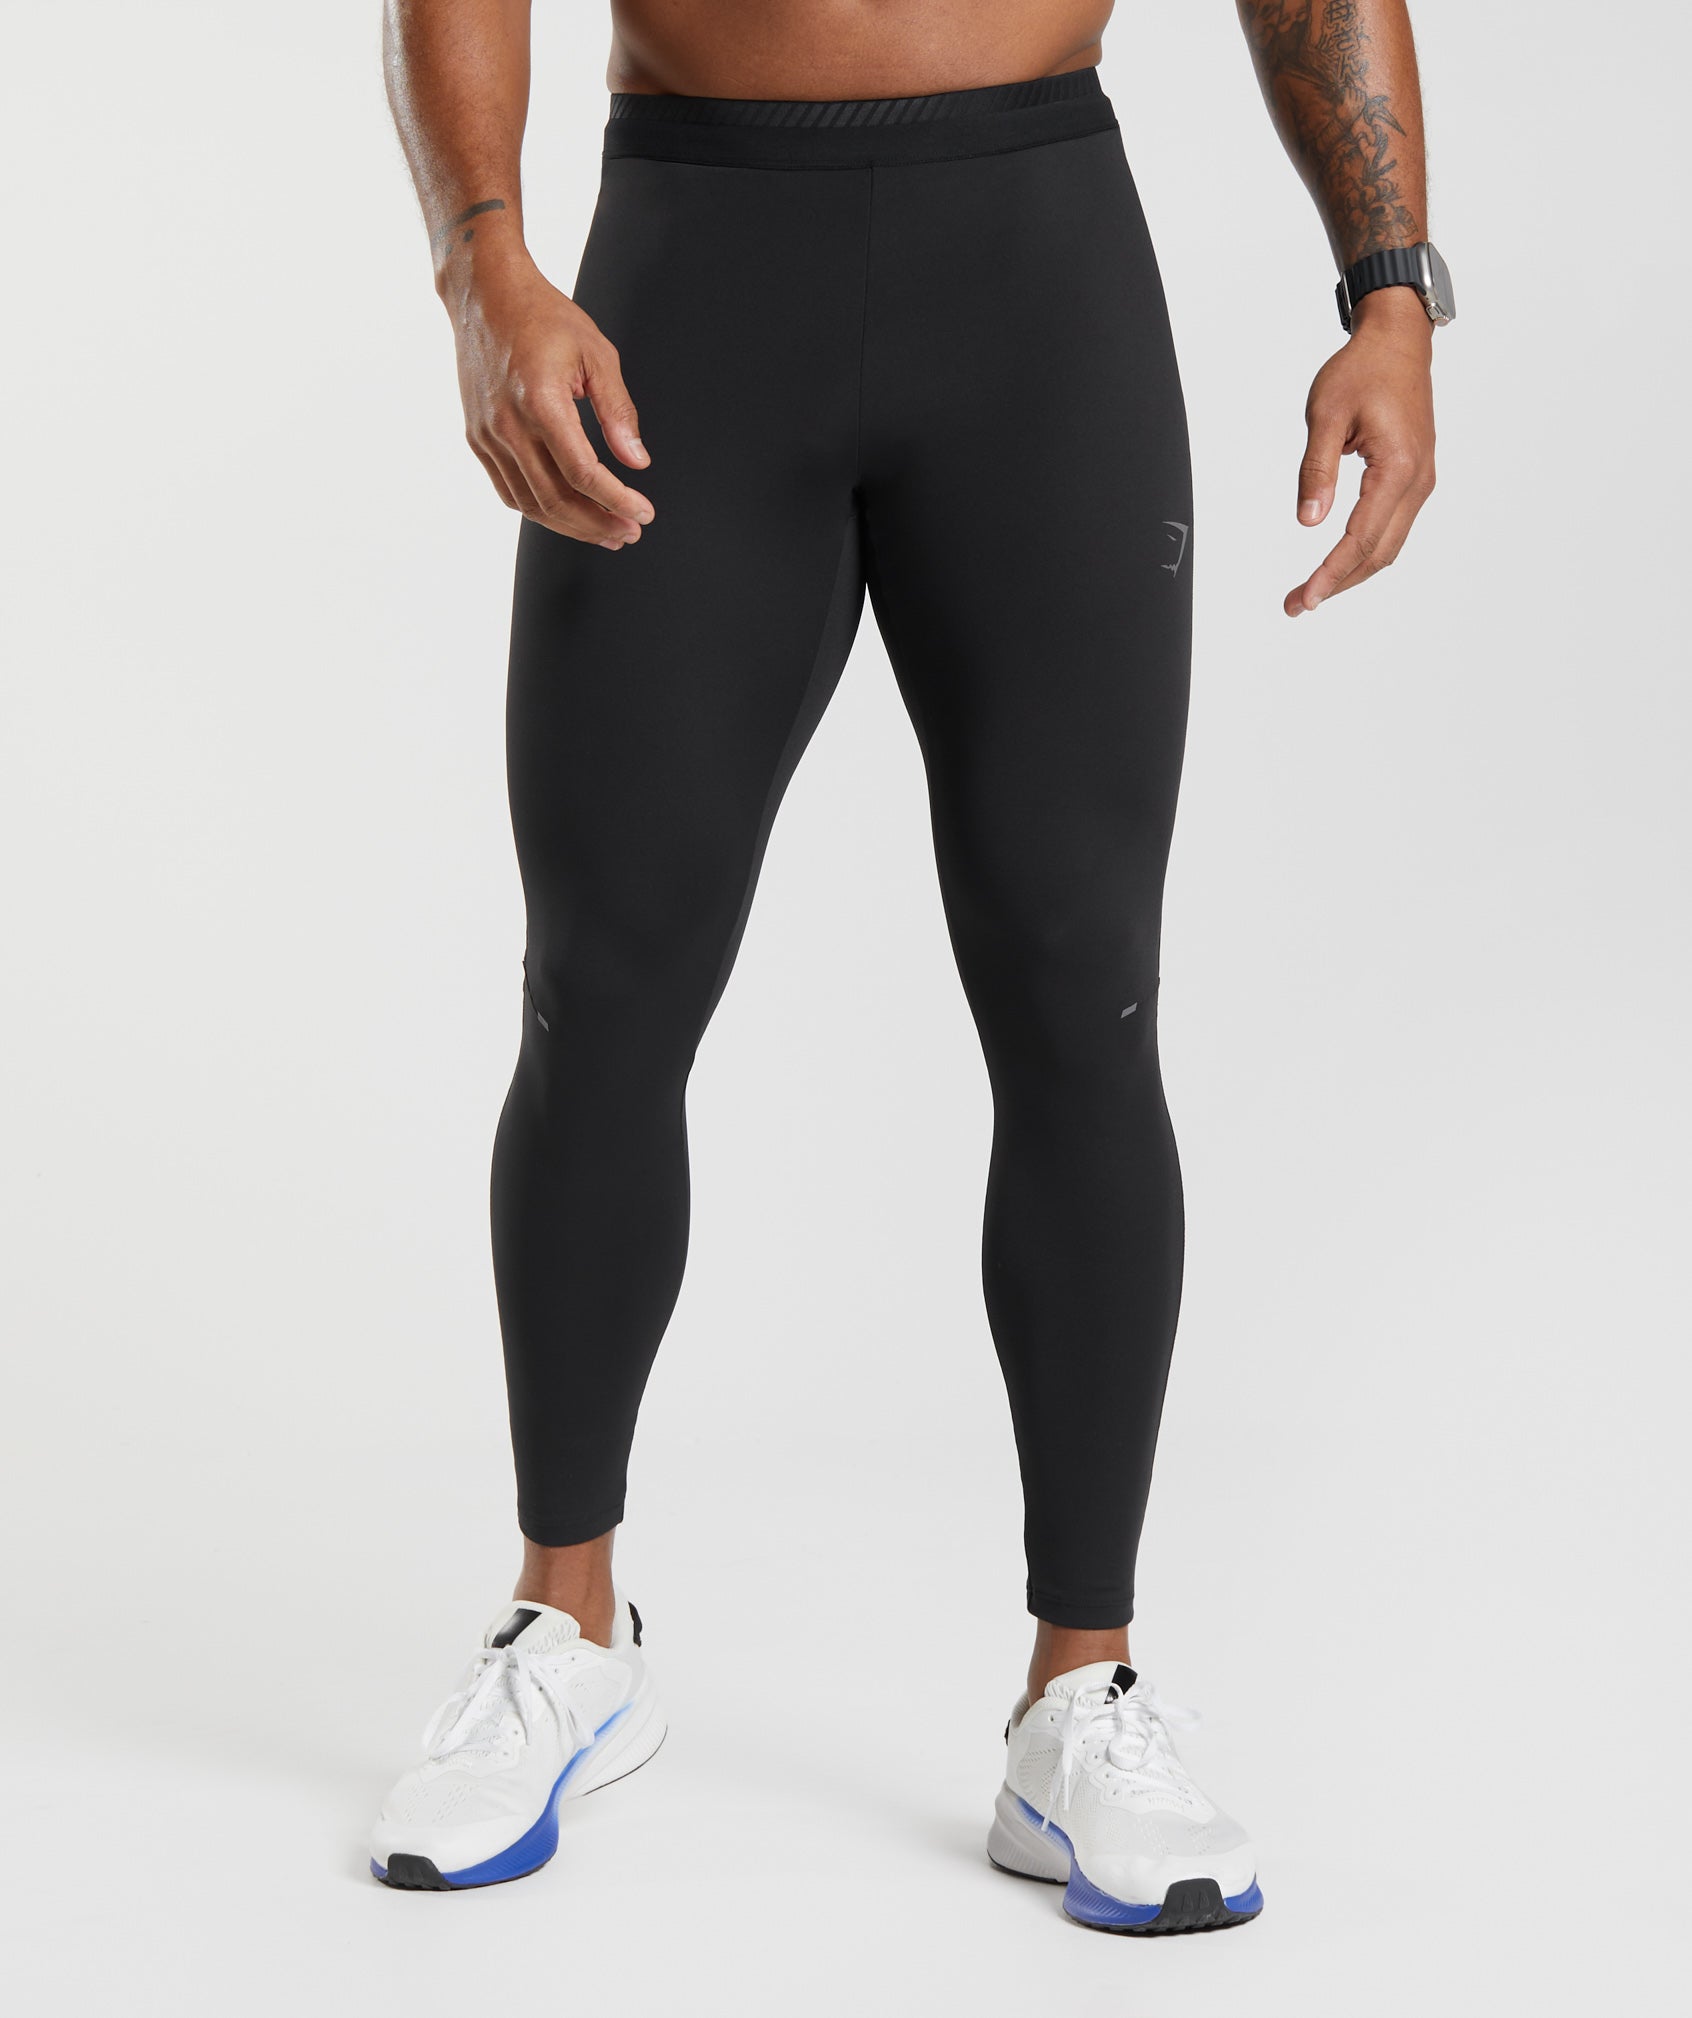 Men Compression Yoga Pants Sports Running Workout Gym Baselayer Stretch  Leggings